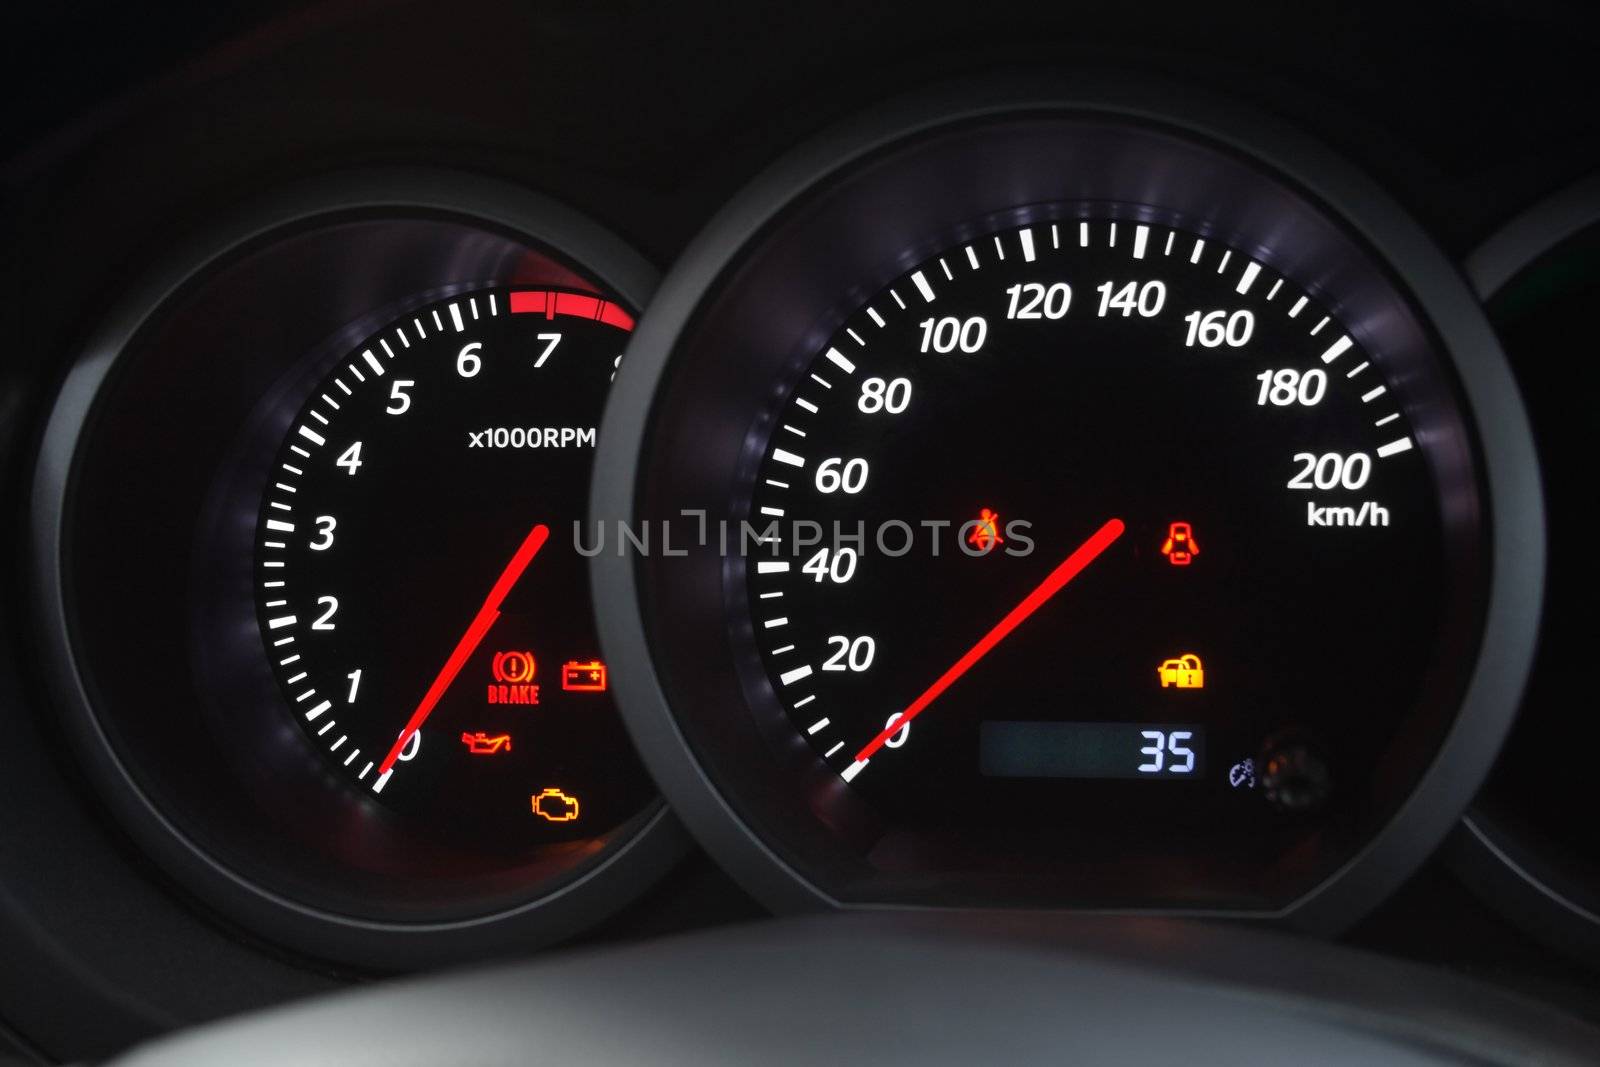 Closeup shot of a speedometer and tachometer of a modern car.